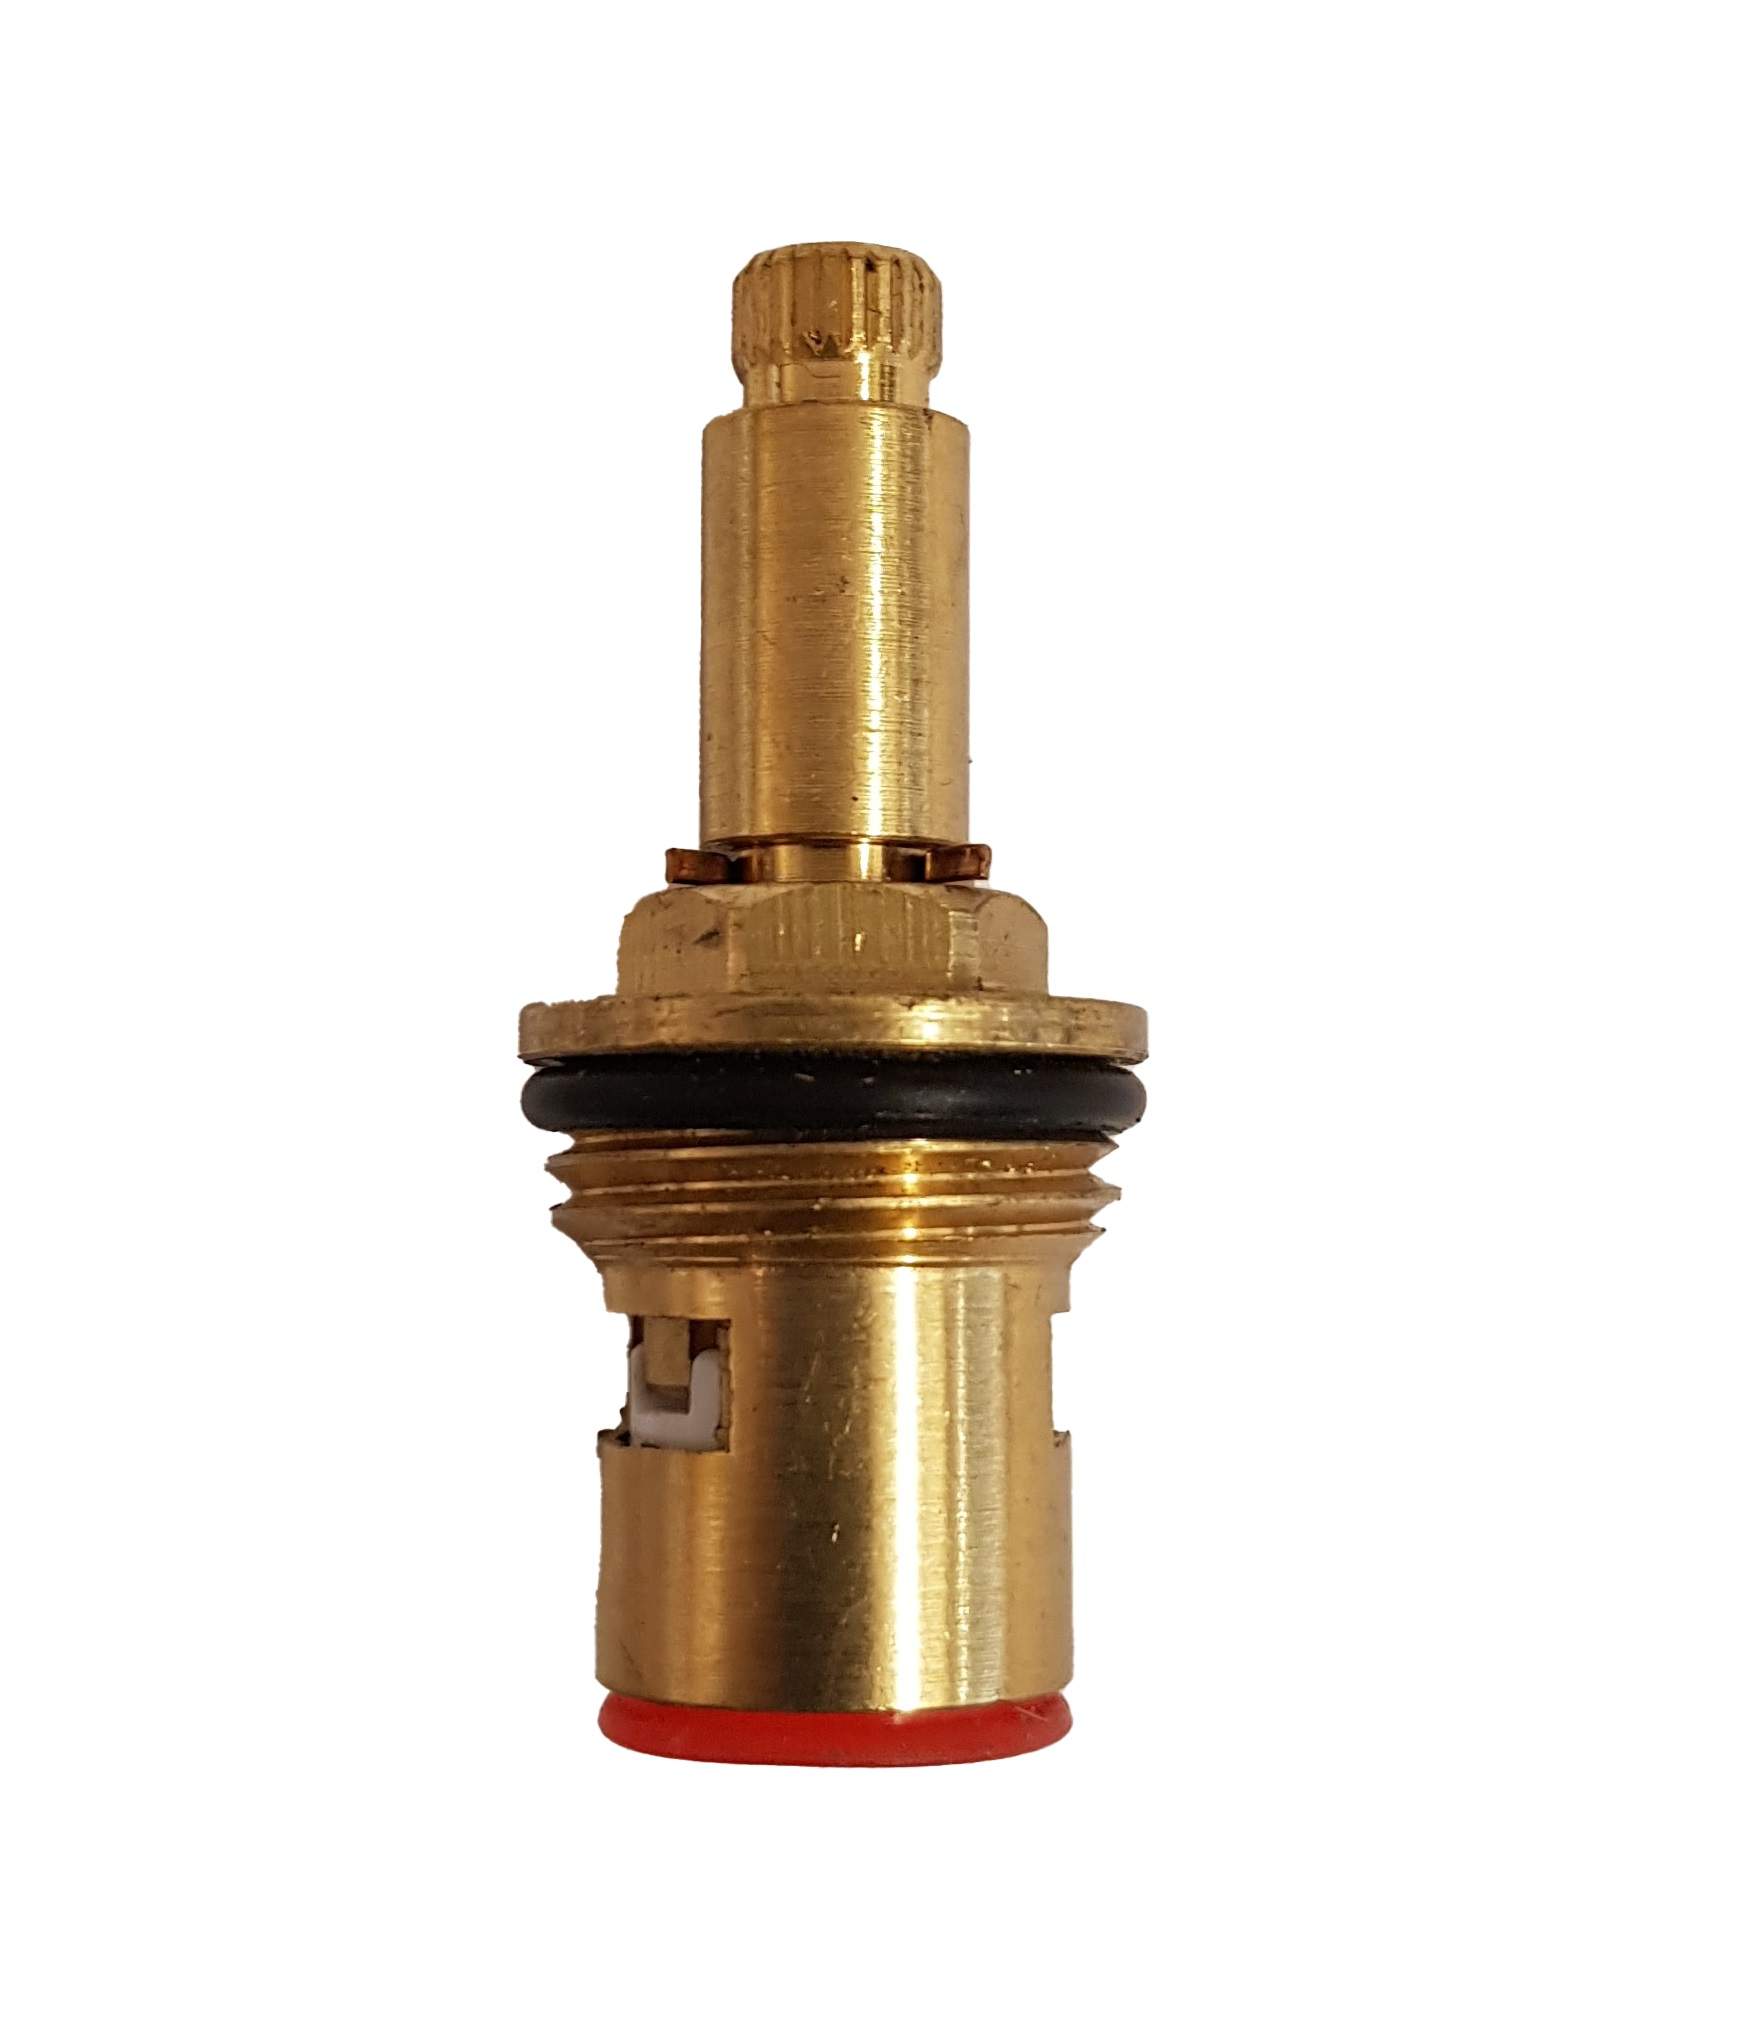 1/2 turn ceramic tap head for fountain valve 205